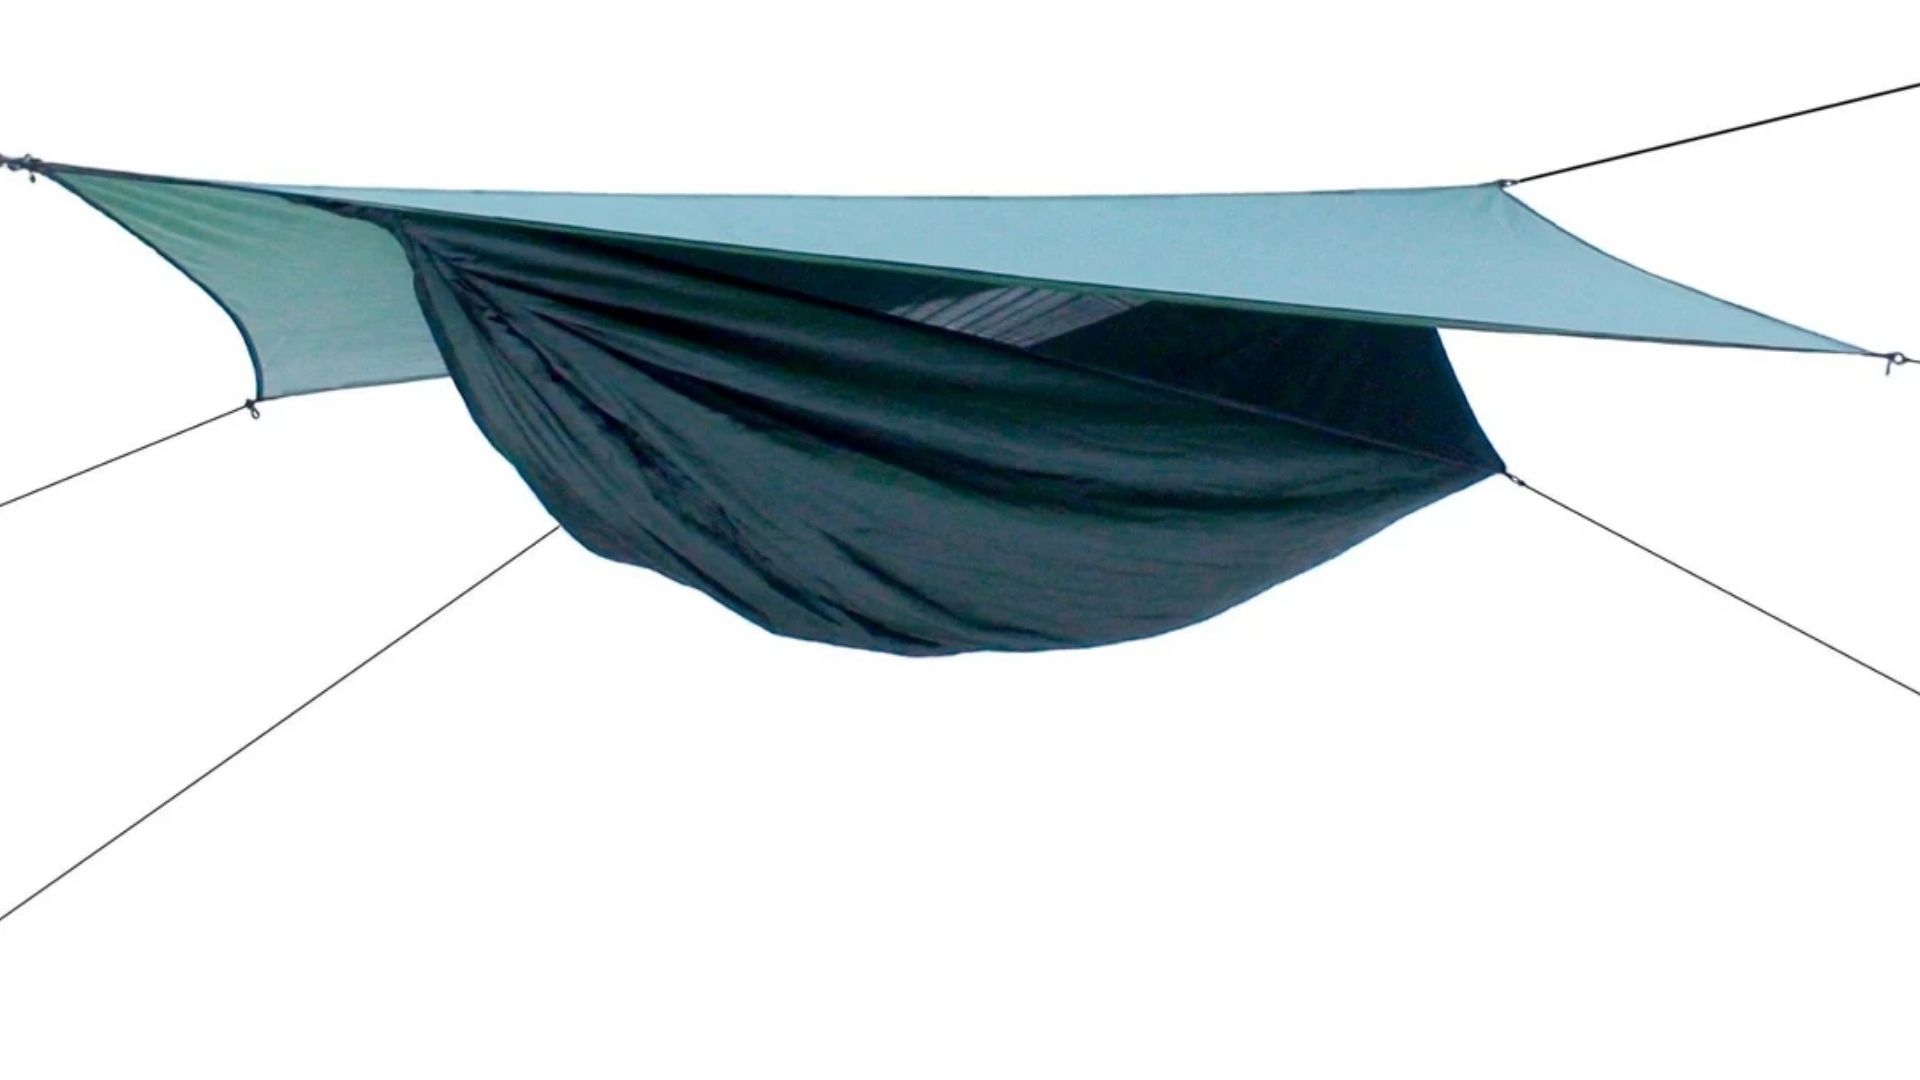 https://taskandpurpose.com/uploads/2021/12/03/best-camping-hammocks2.1.jpg?auto=webp&width=800&canvas=16:10,offset-x50